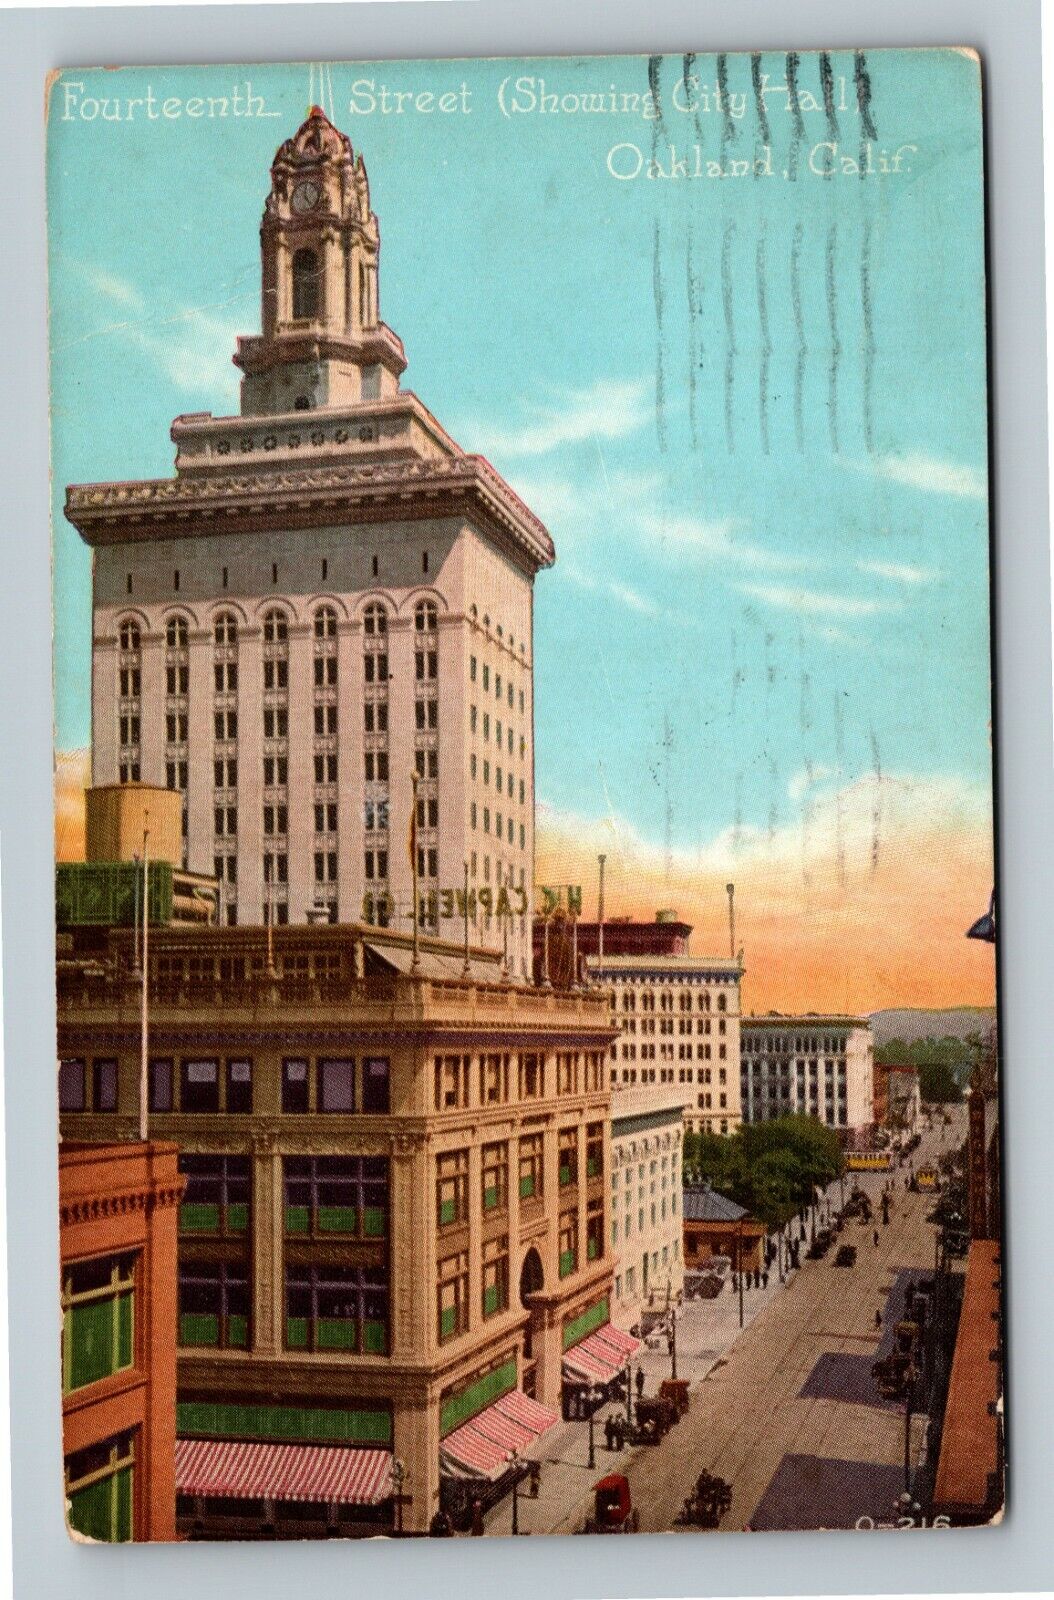 Oakland CA, Fourteenth Street, City Hall, California c1921 Vintage Postcard